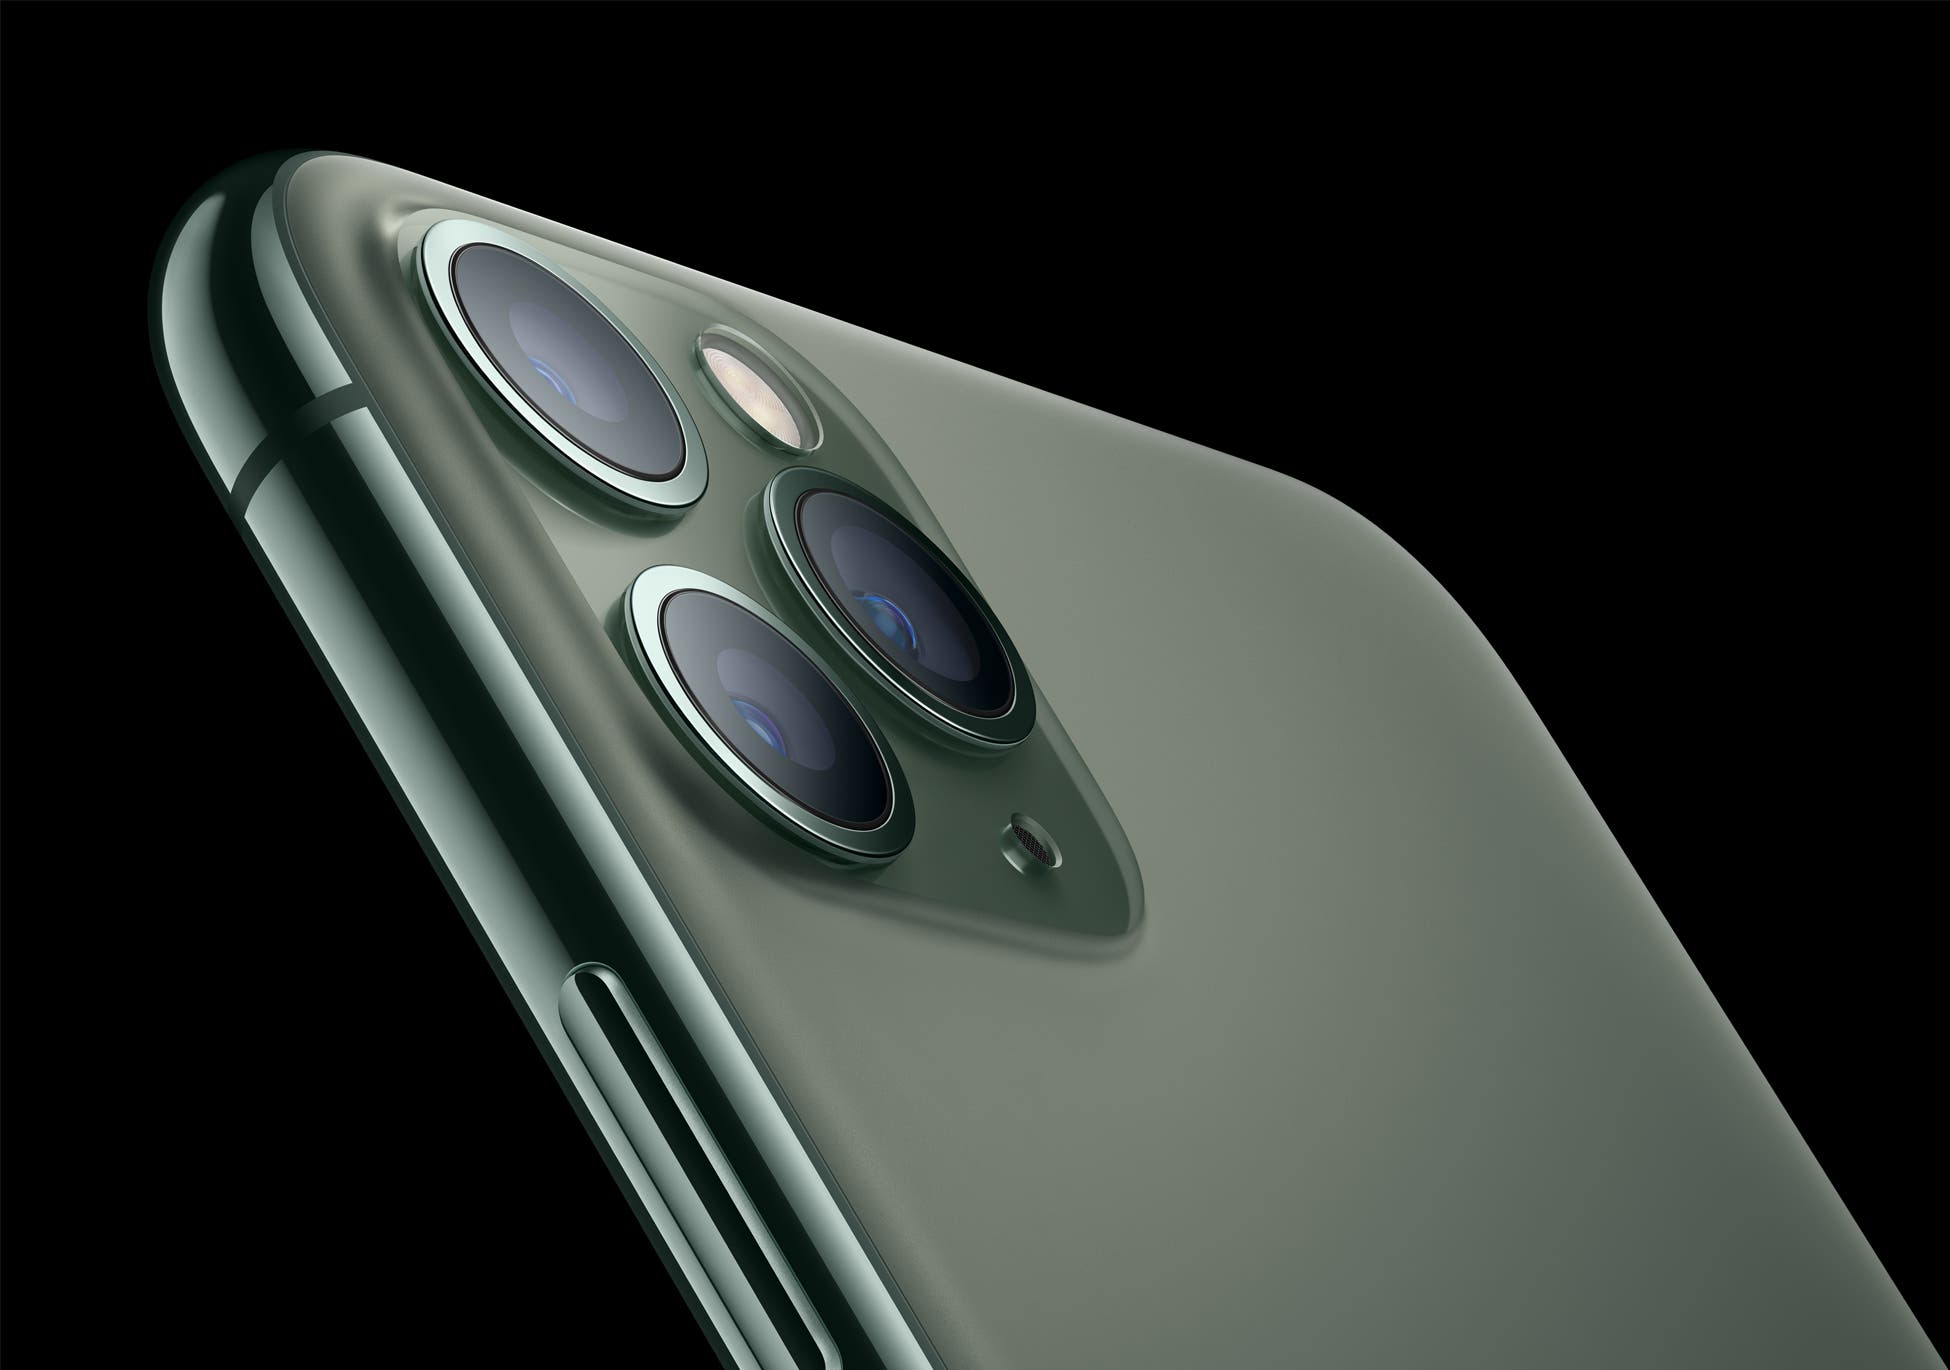 Iklan iPhone 11 Pro baru menyoroti daya tahan dan kameranya 1